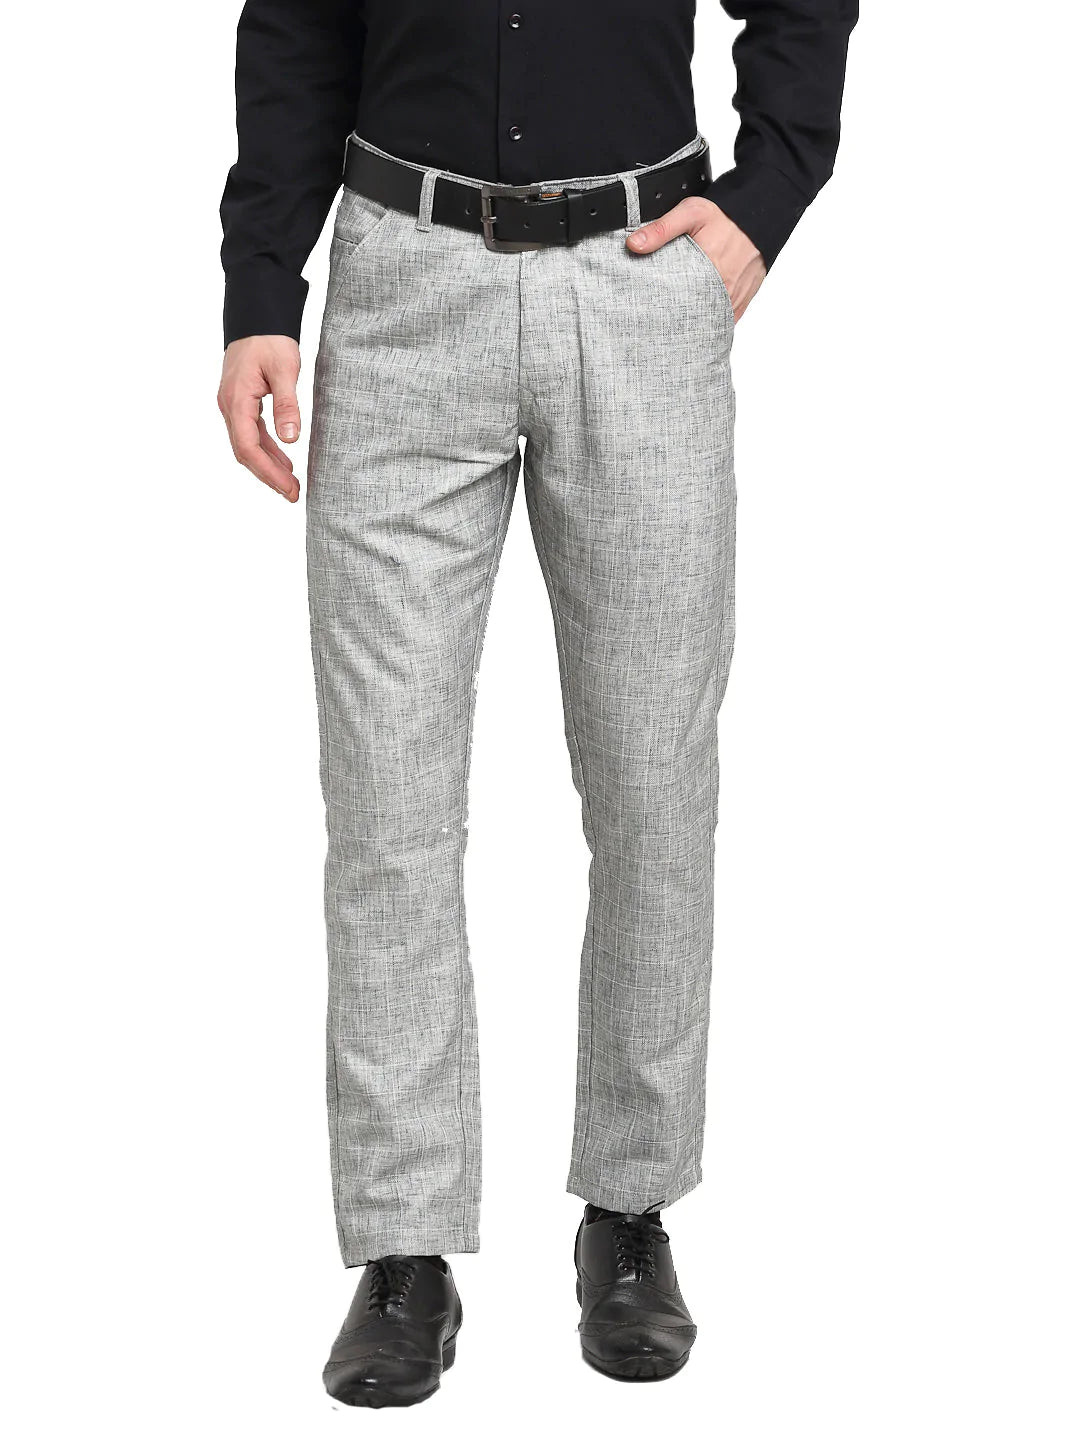 Jainish Men's Grey Cotton Solid Formal Trousers ( FGP 268Grey )